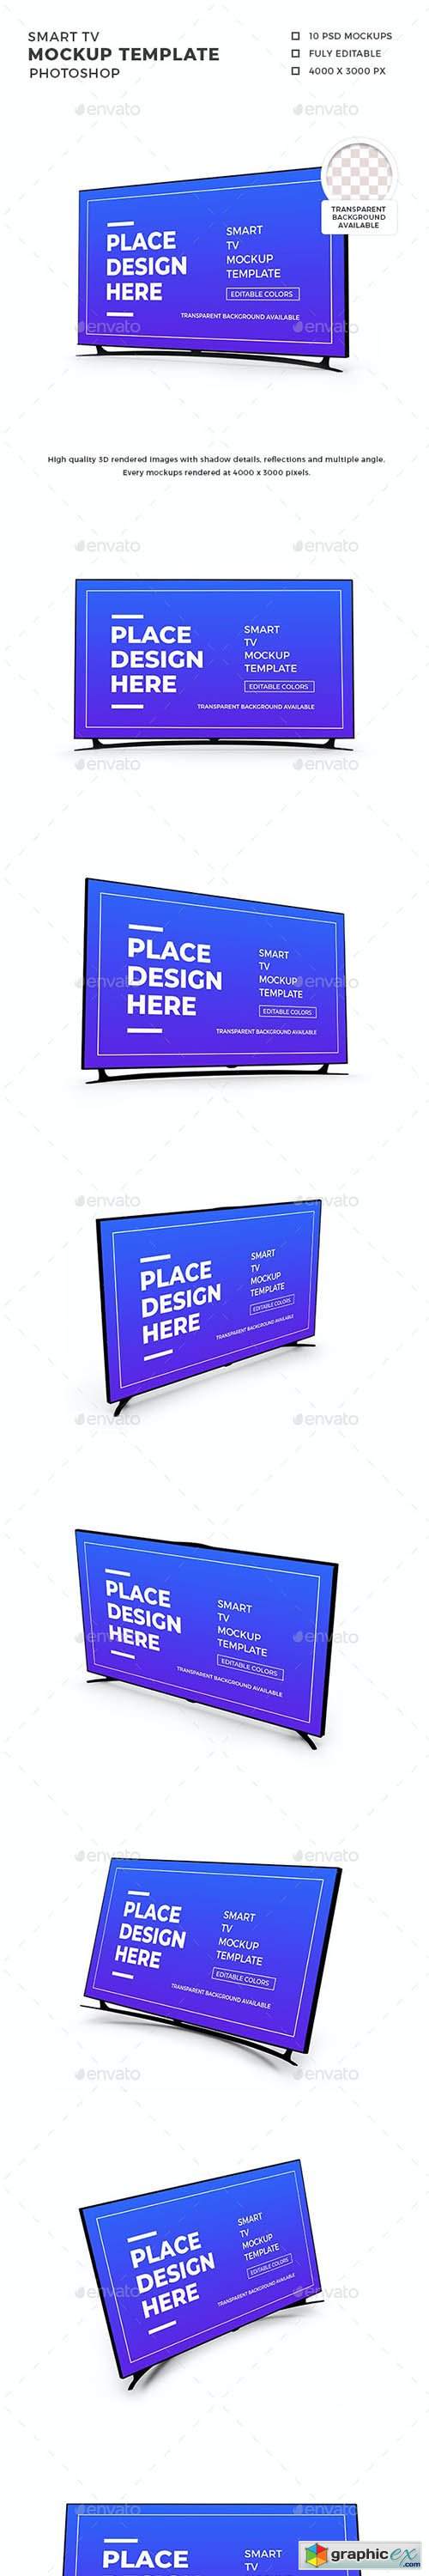 Smart TV 3D Mockup Template 